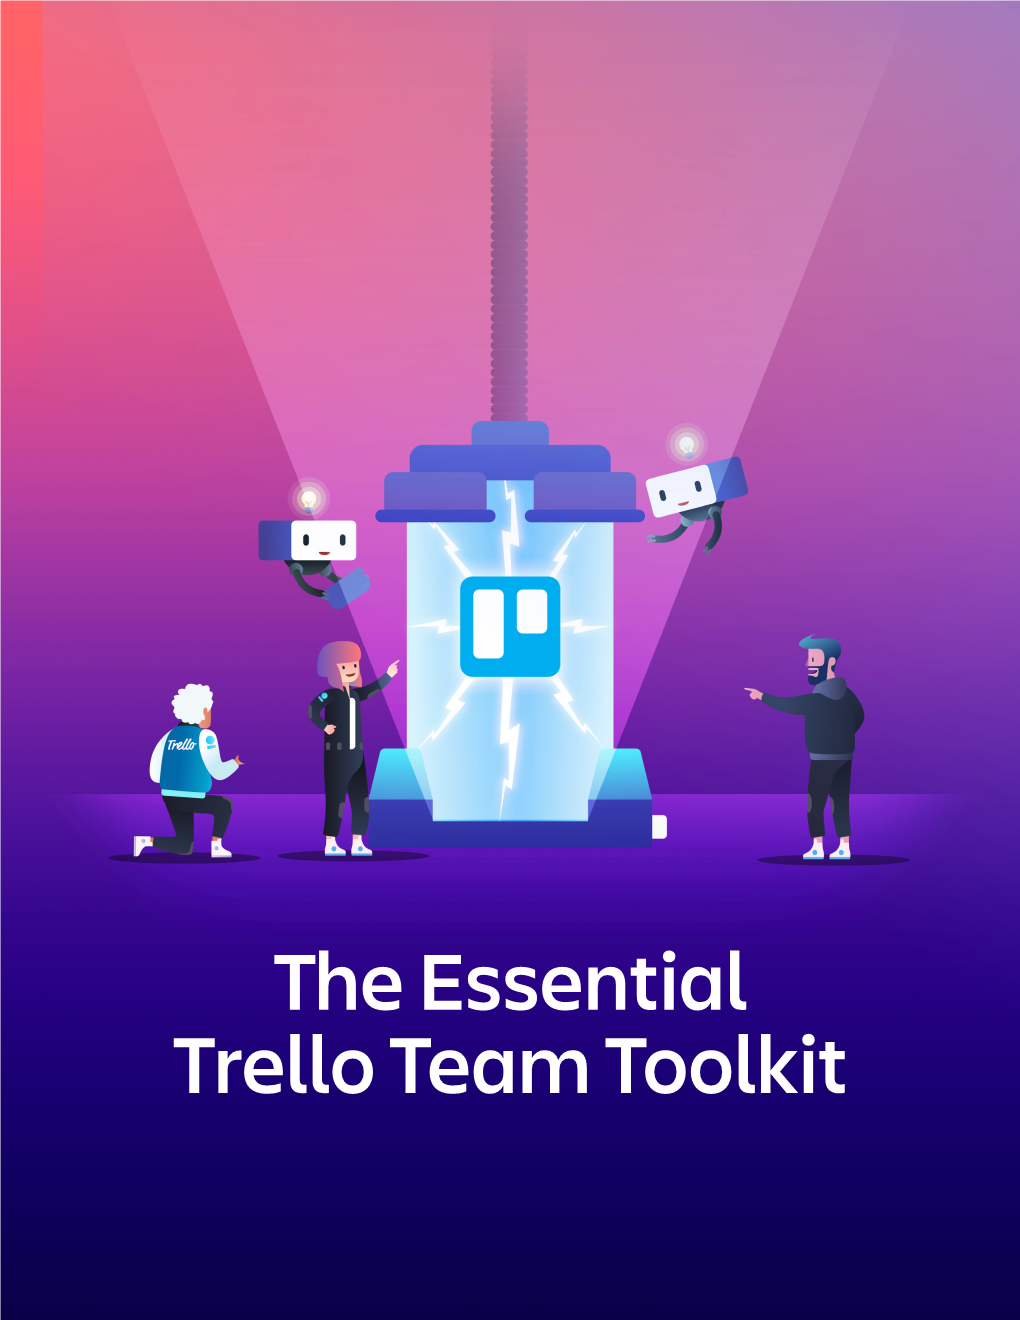 The Essential Trello Team Toolkit Contents